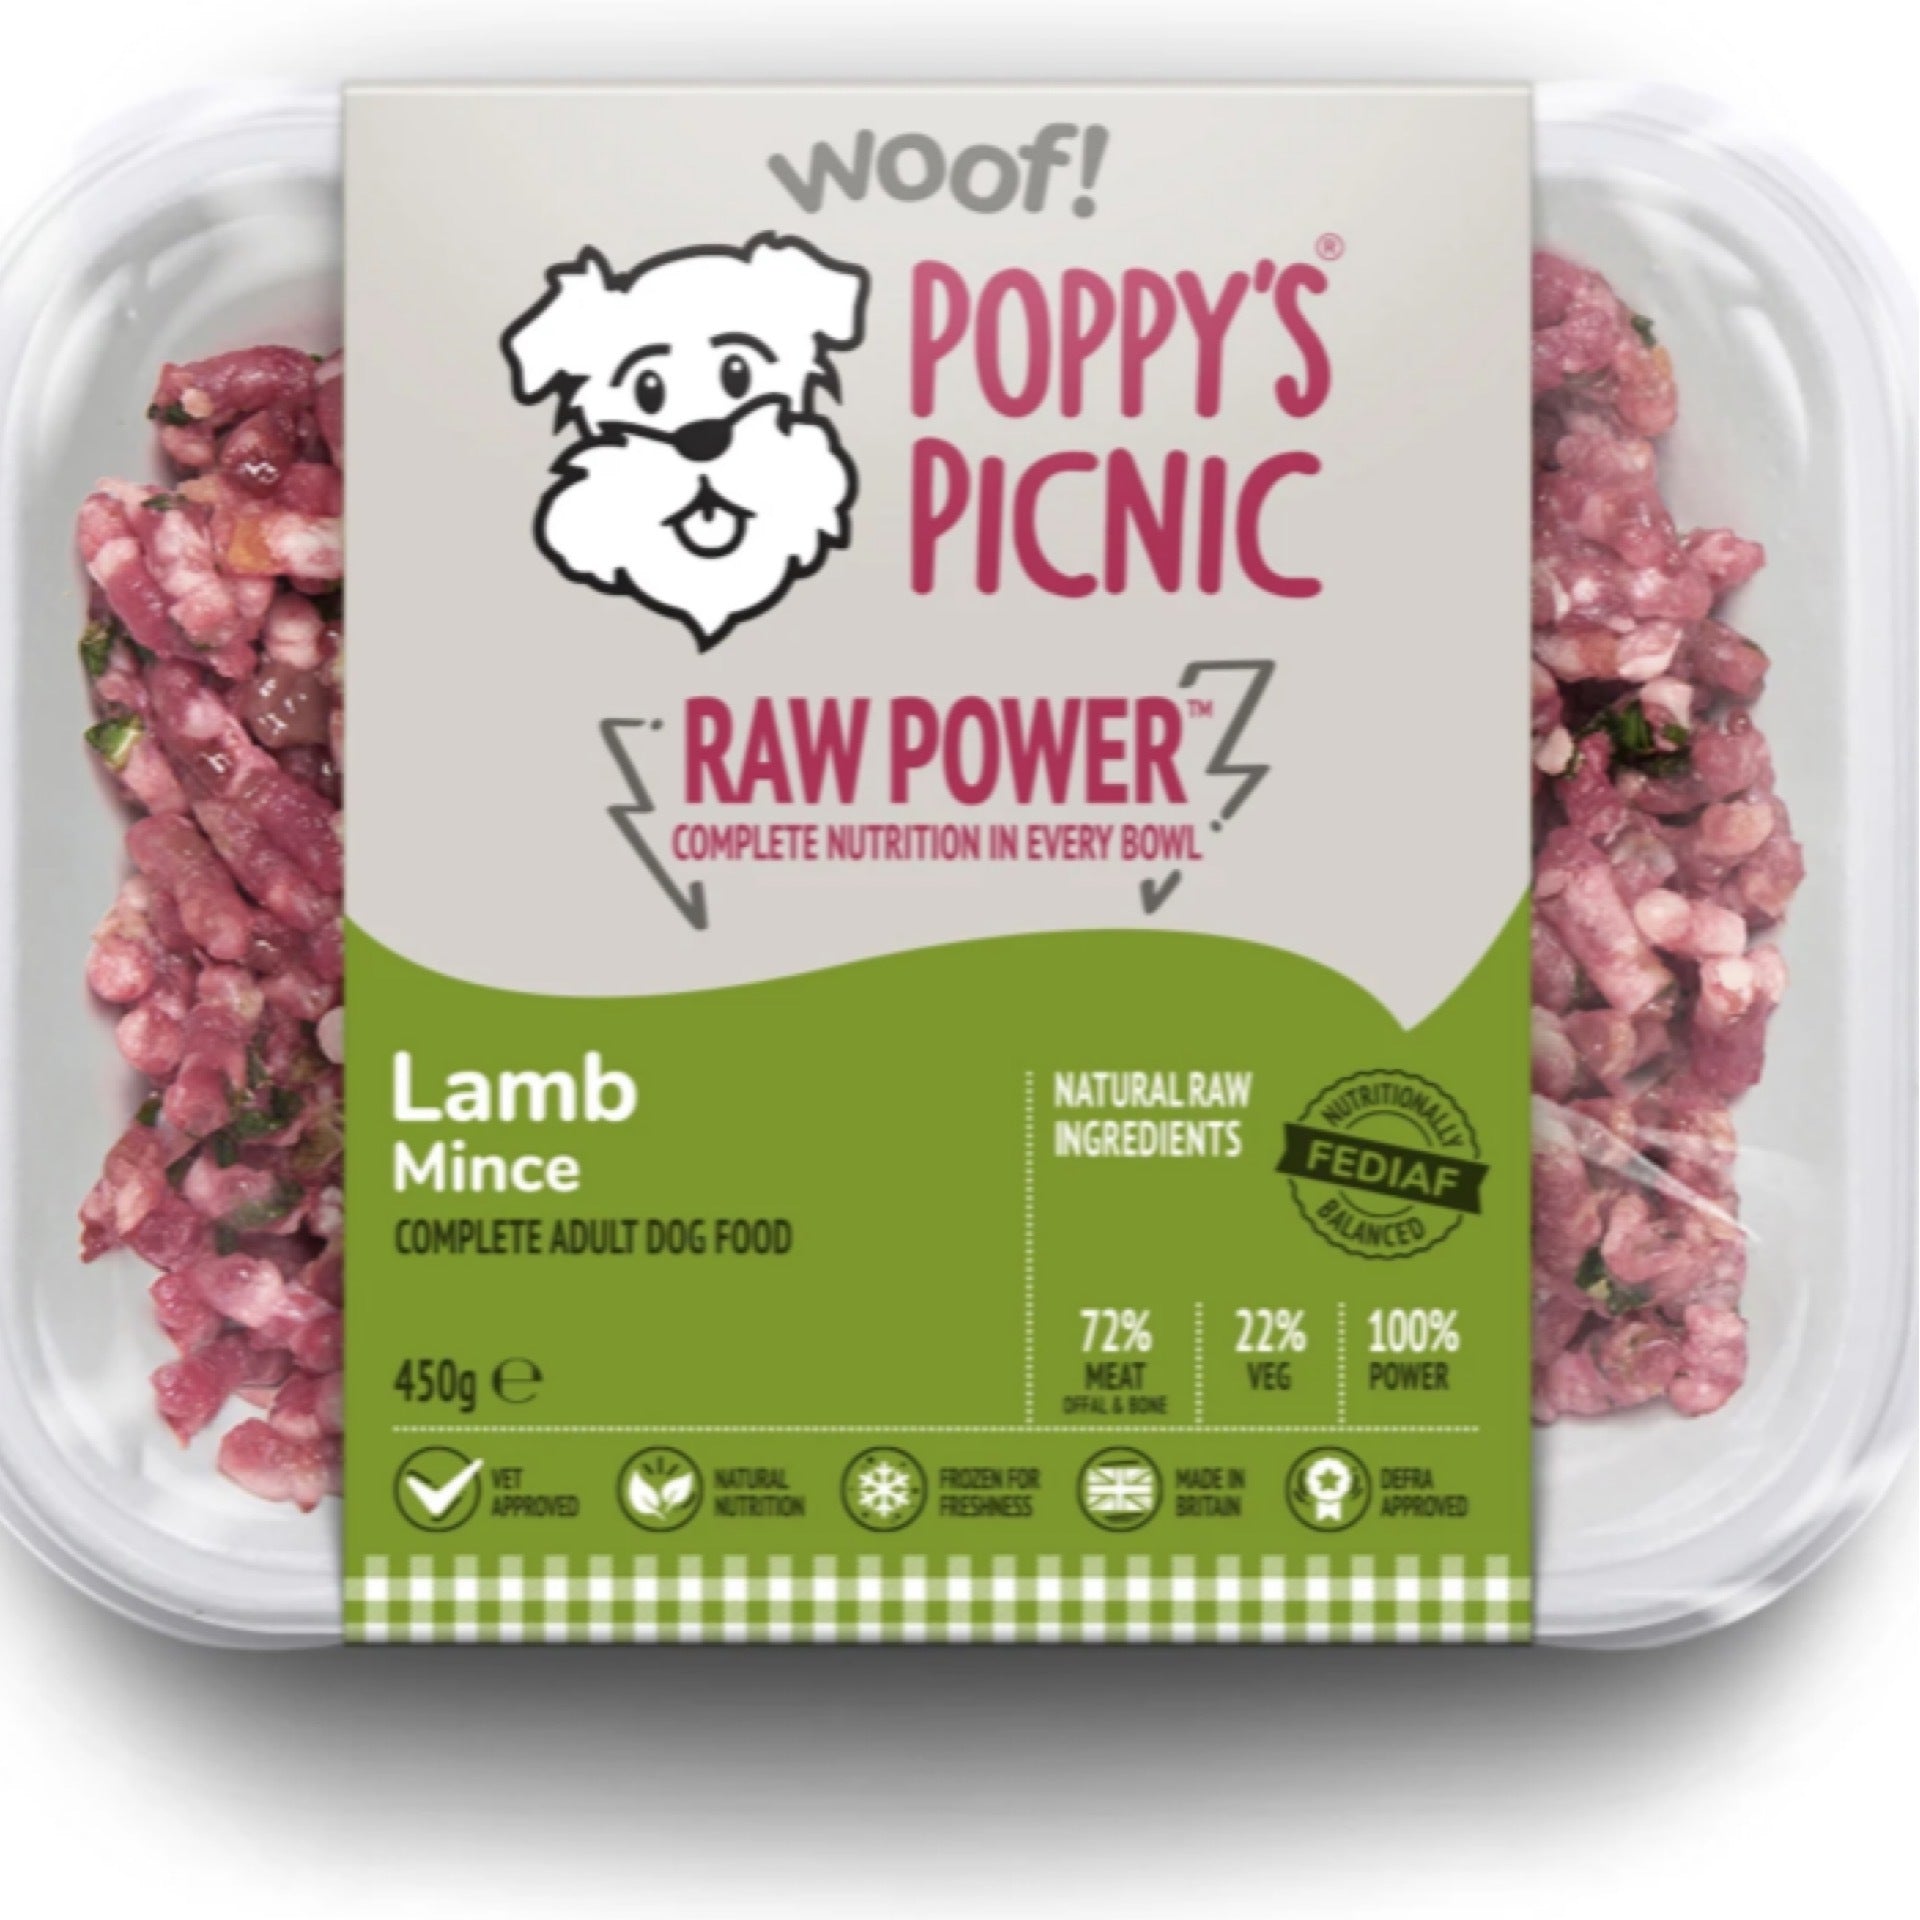 Poppy's Picnic Raw Power Lamb 450g